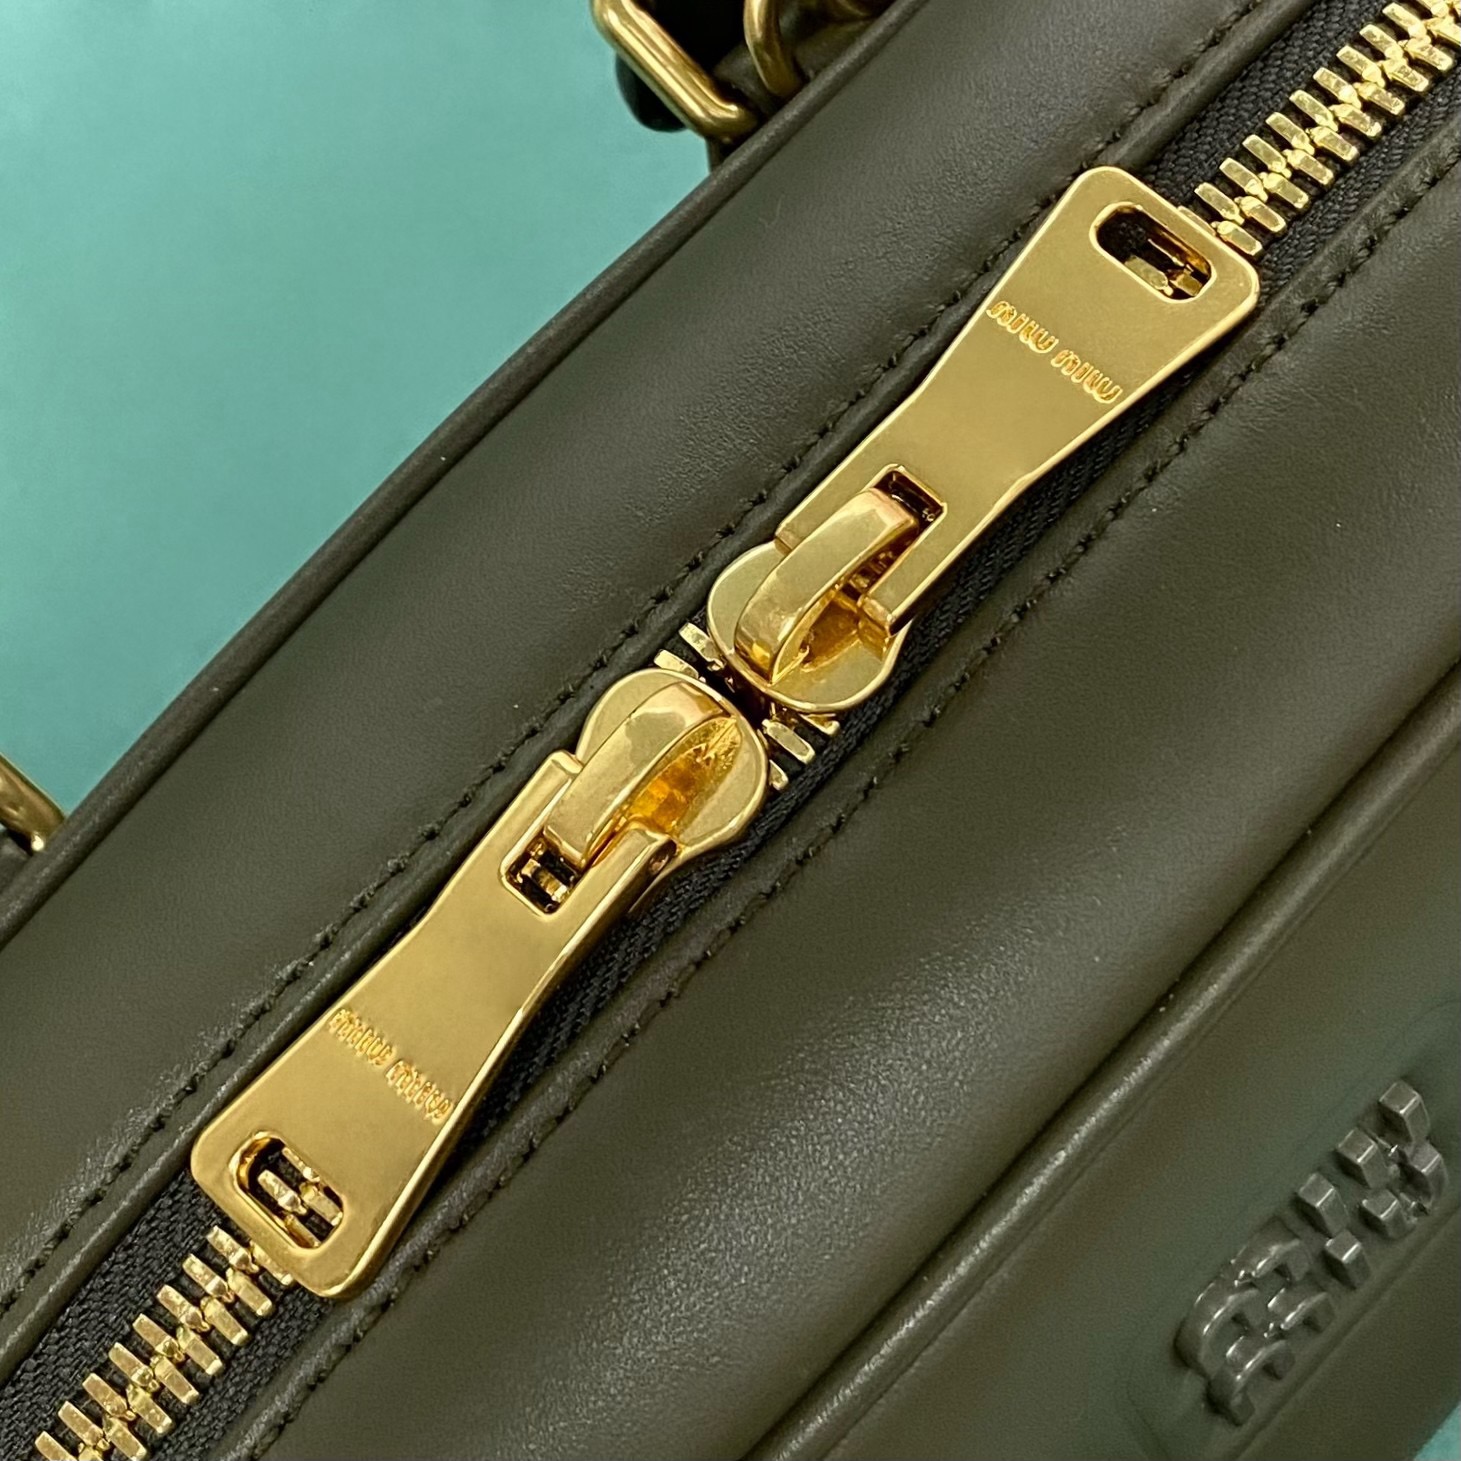 MIU MIU Original Leather Top Handle Bag 5BB147 Dark Green